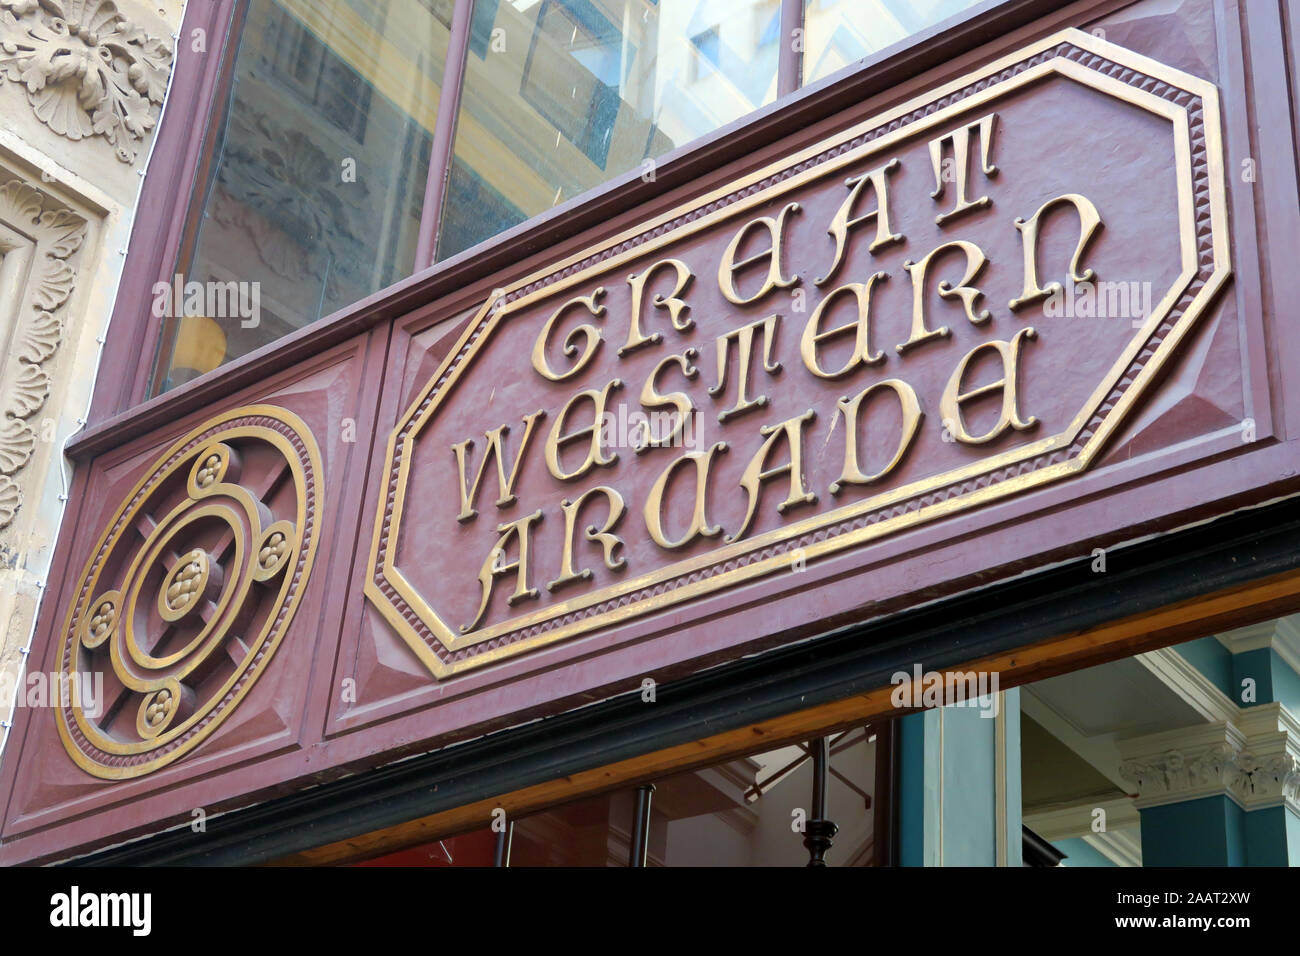 Great Western Arcade sign, Colmore Row, Birmingham, West Midlands, England, B2 5HU Stock Photo